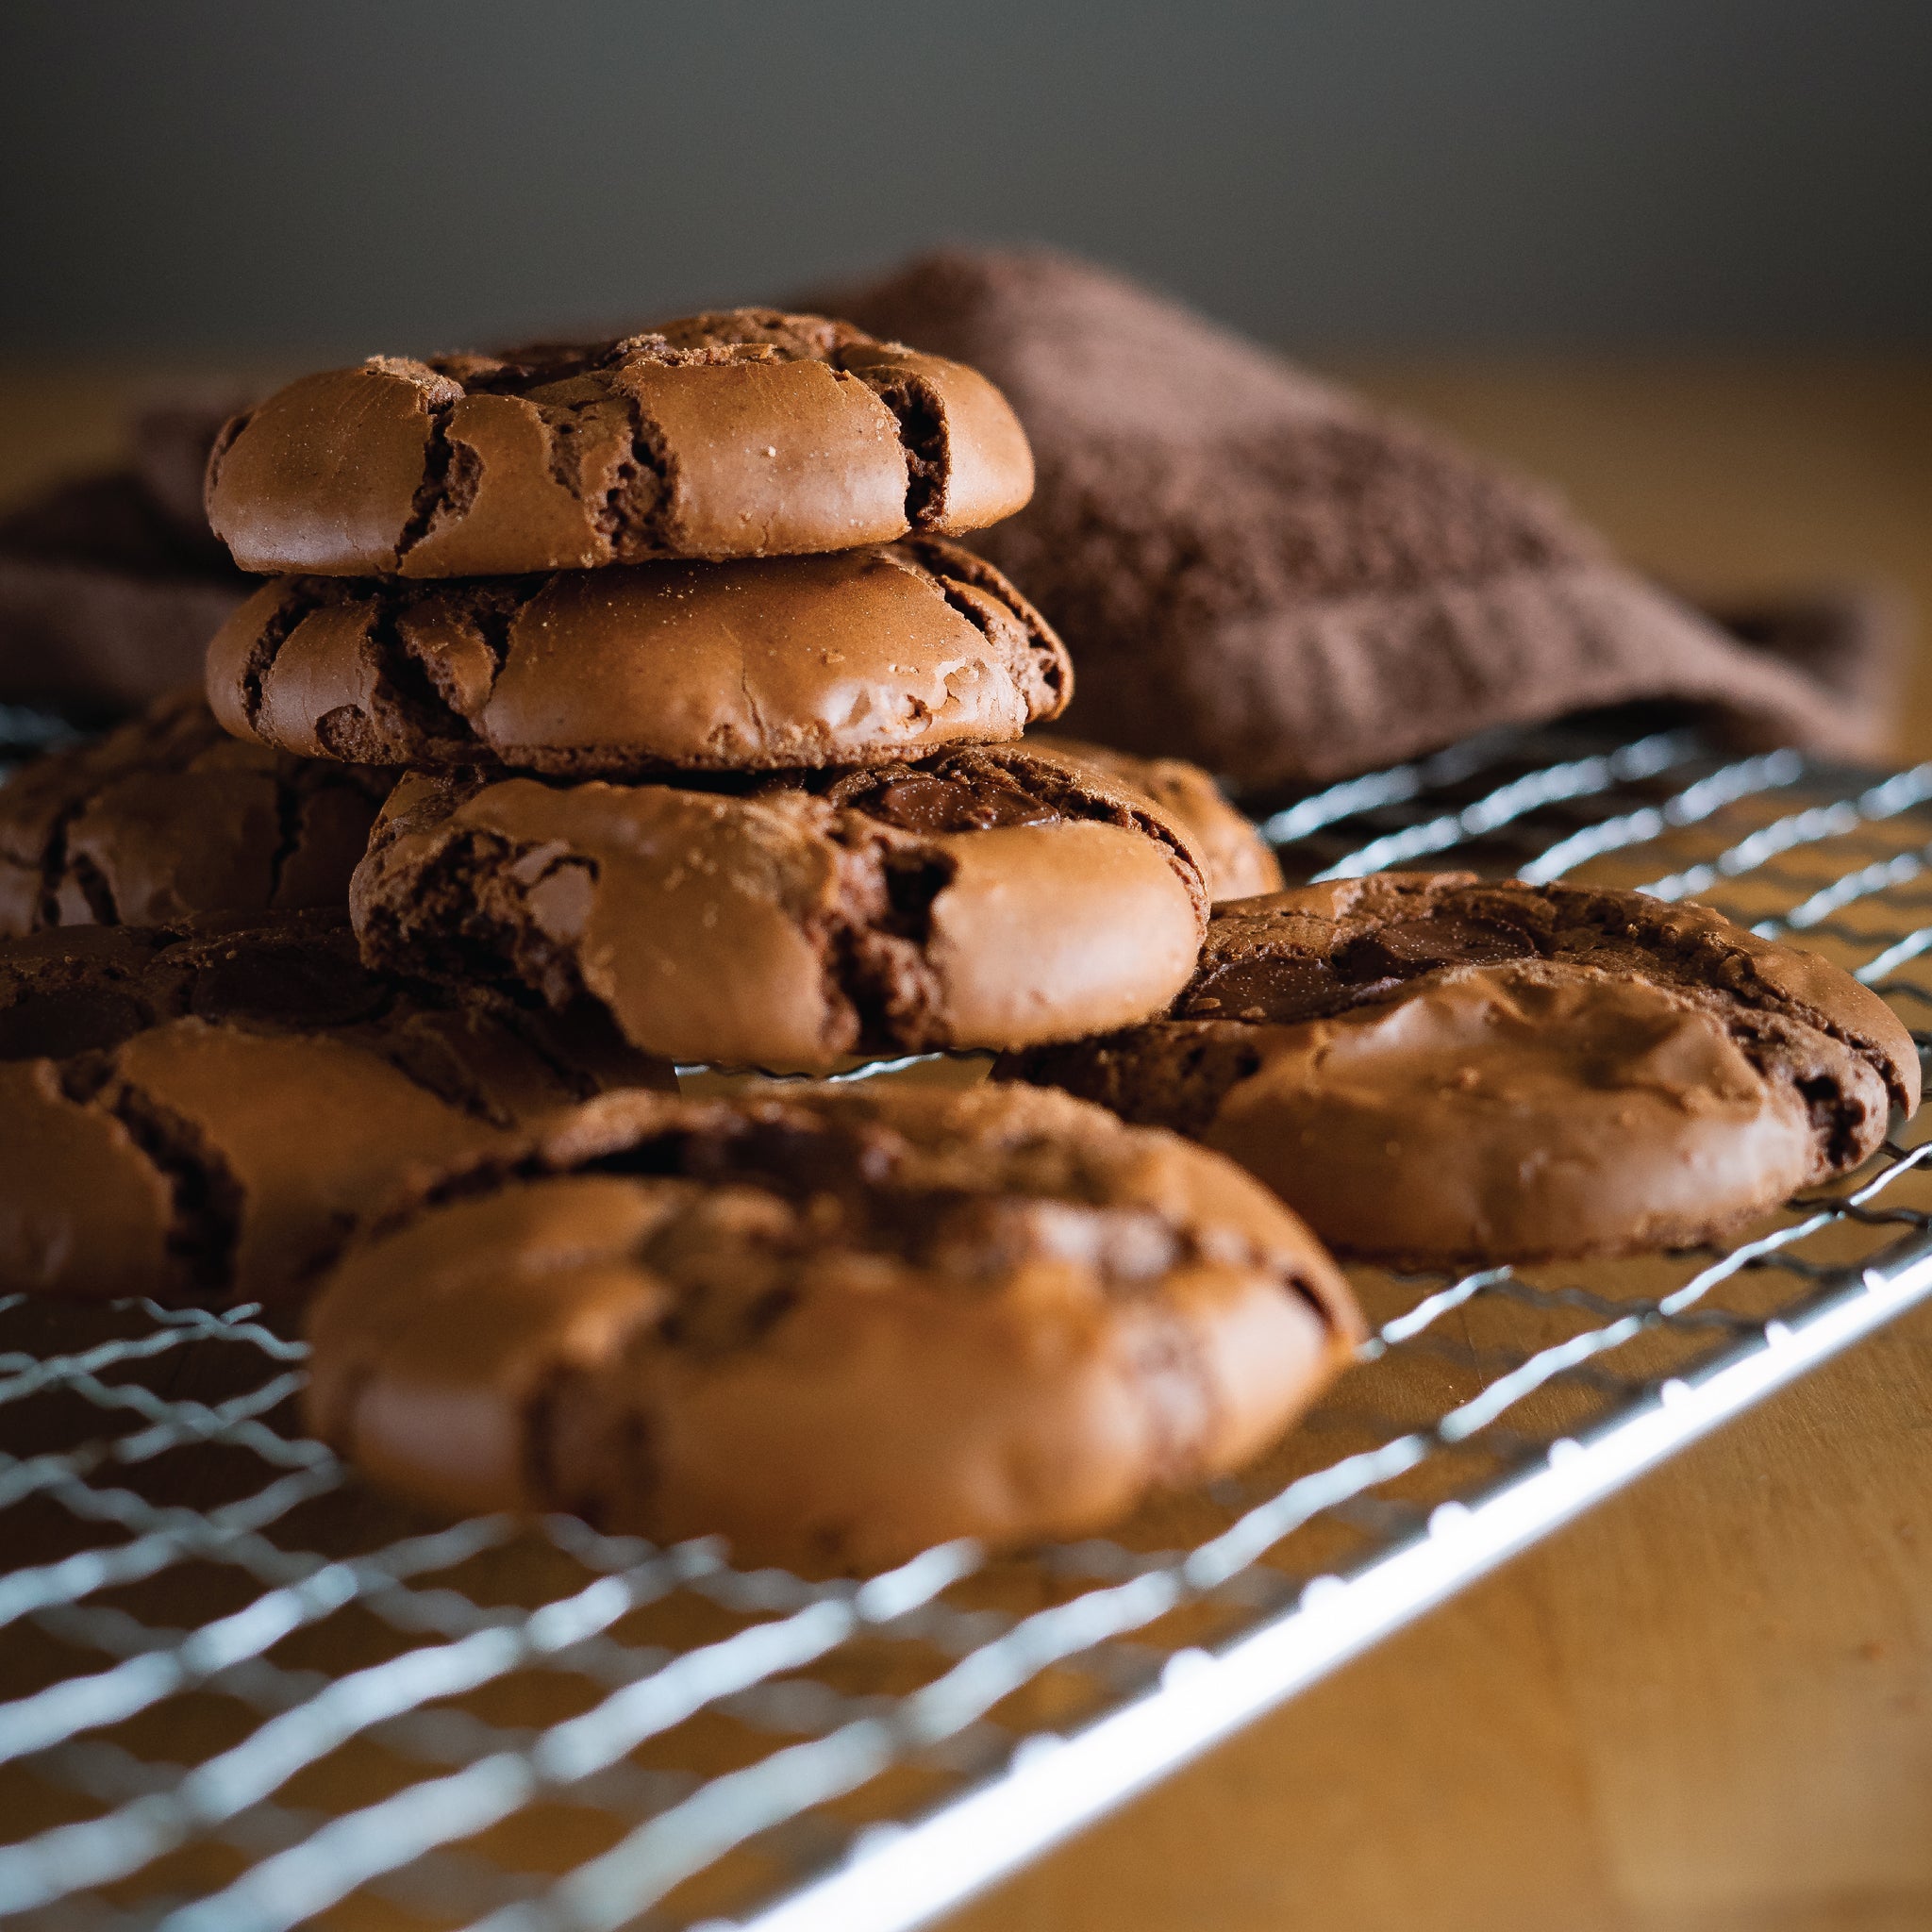 Cookie Sheet with Rack 17" x 13"  Bakeware Sets - Baker's Secret